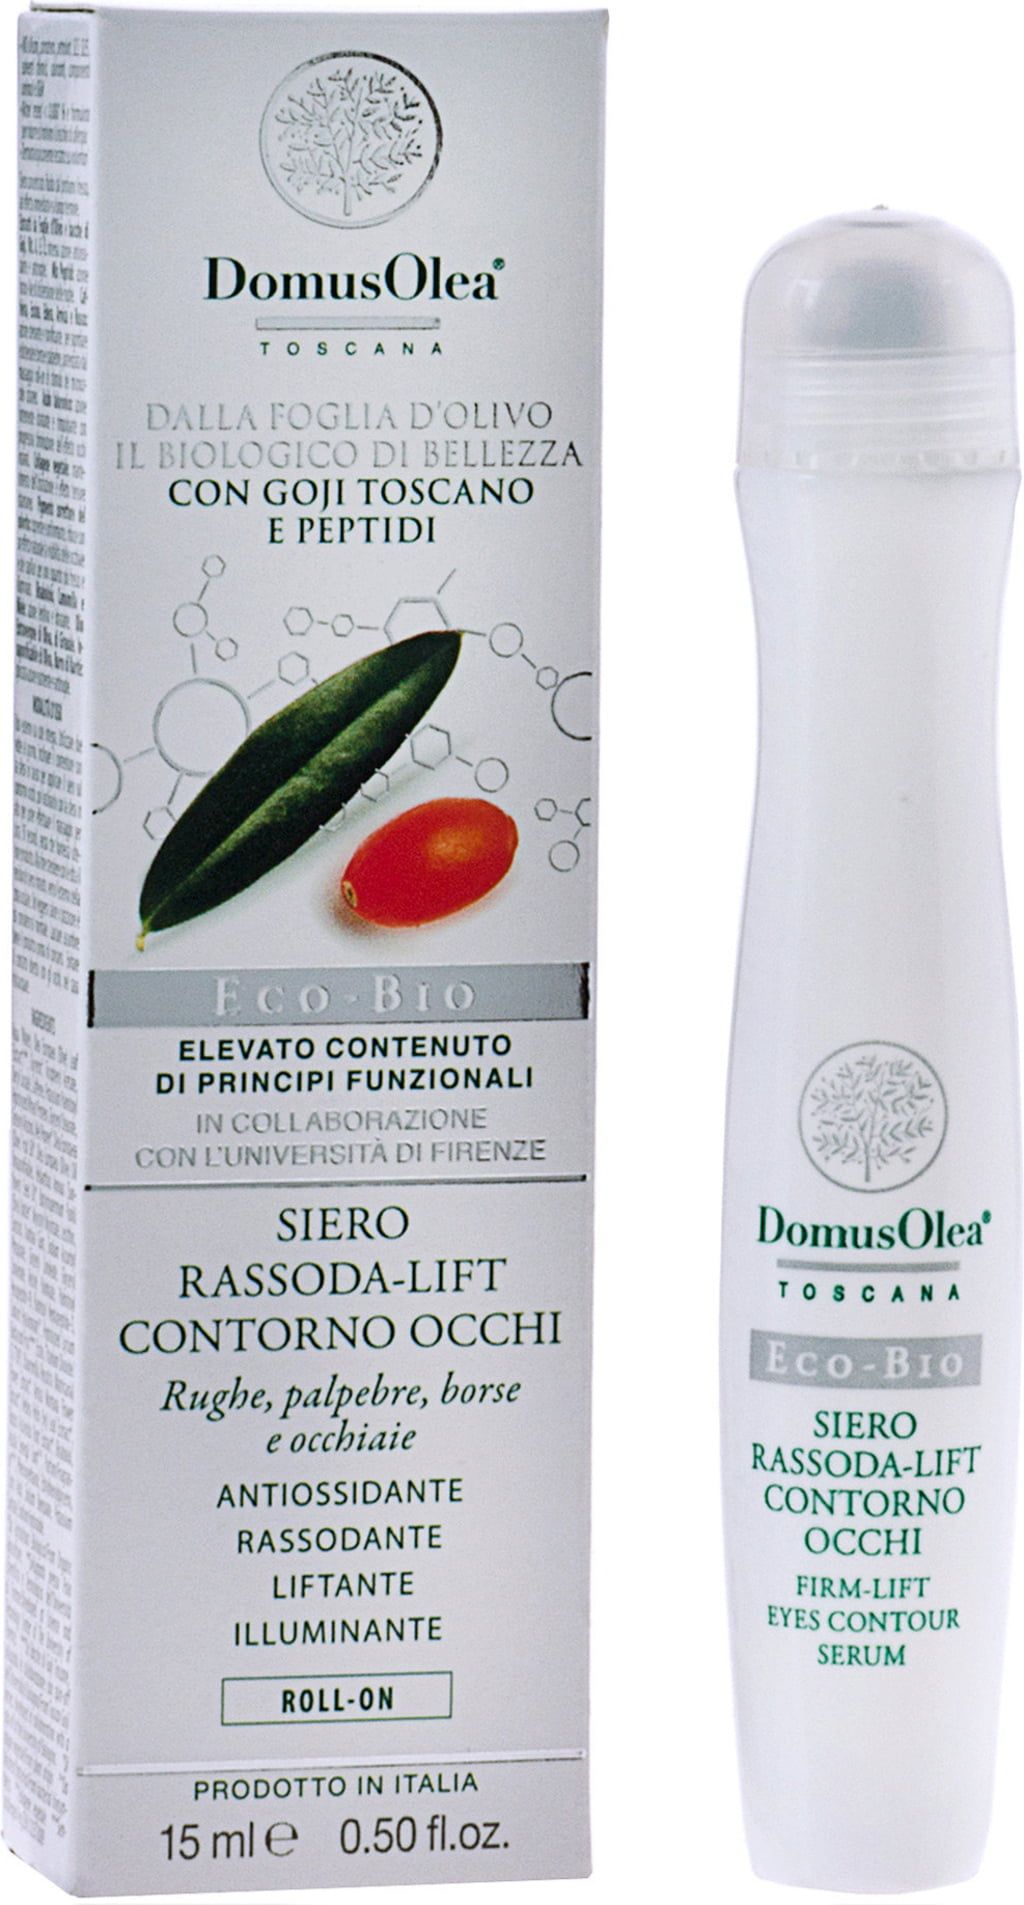 Domus Olea Toscana Siero Contorno Occhi Rassoda Lift - 15 ml